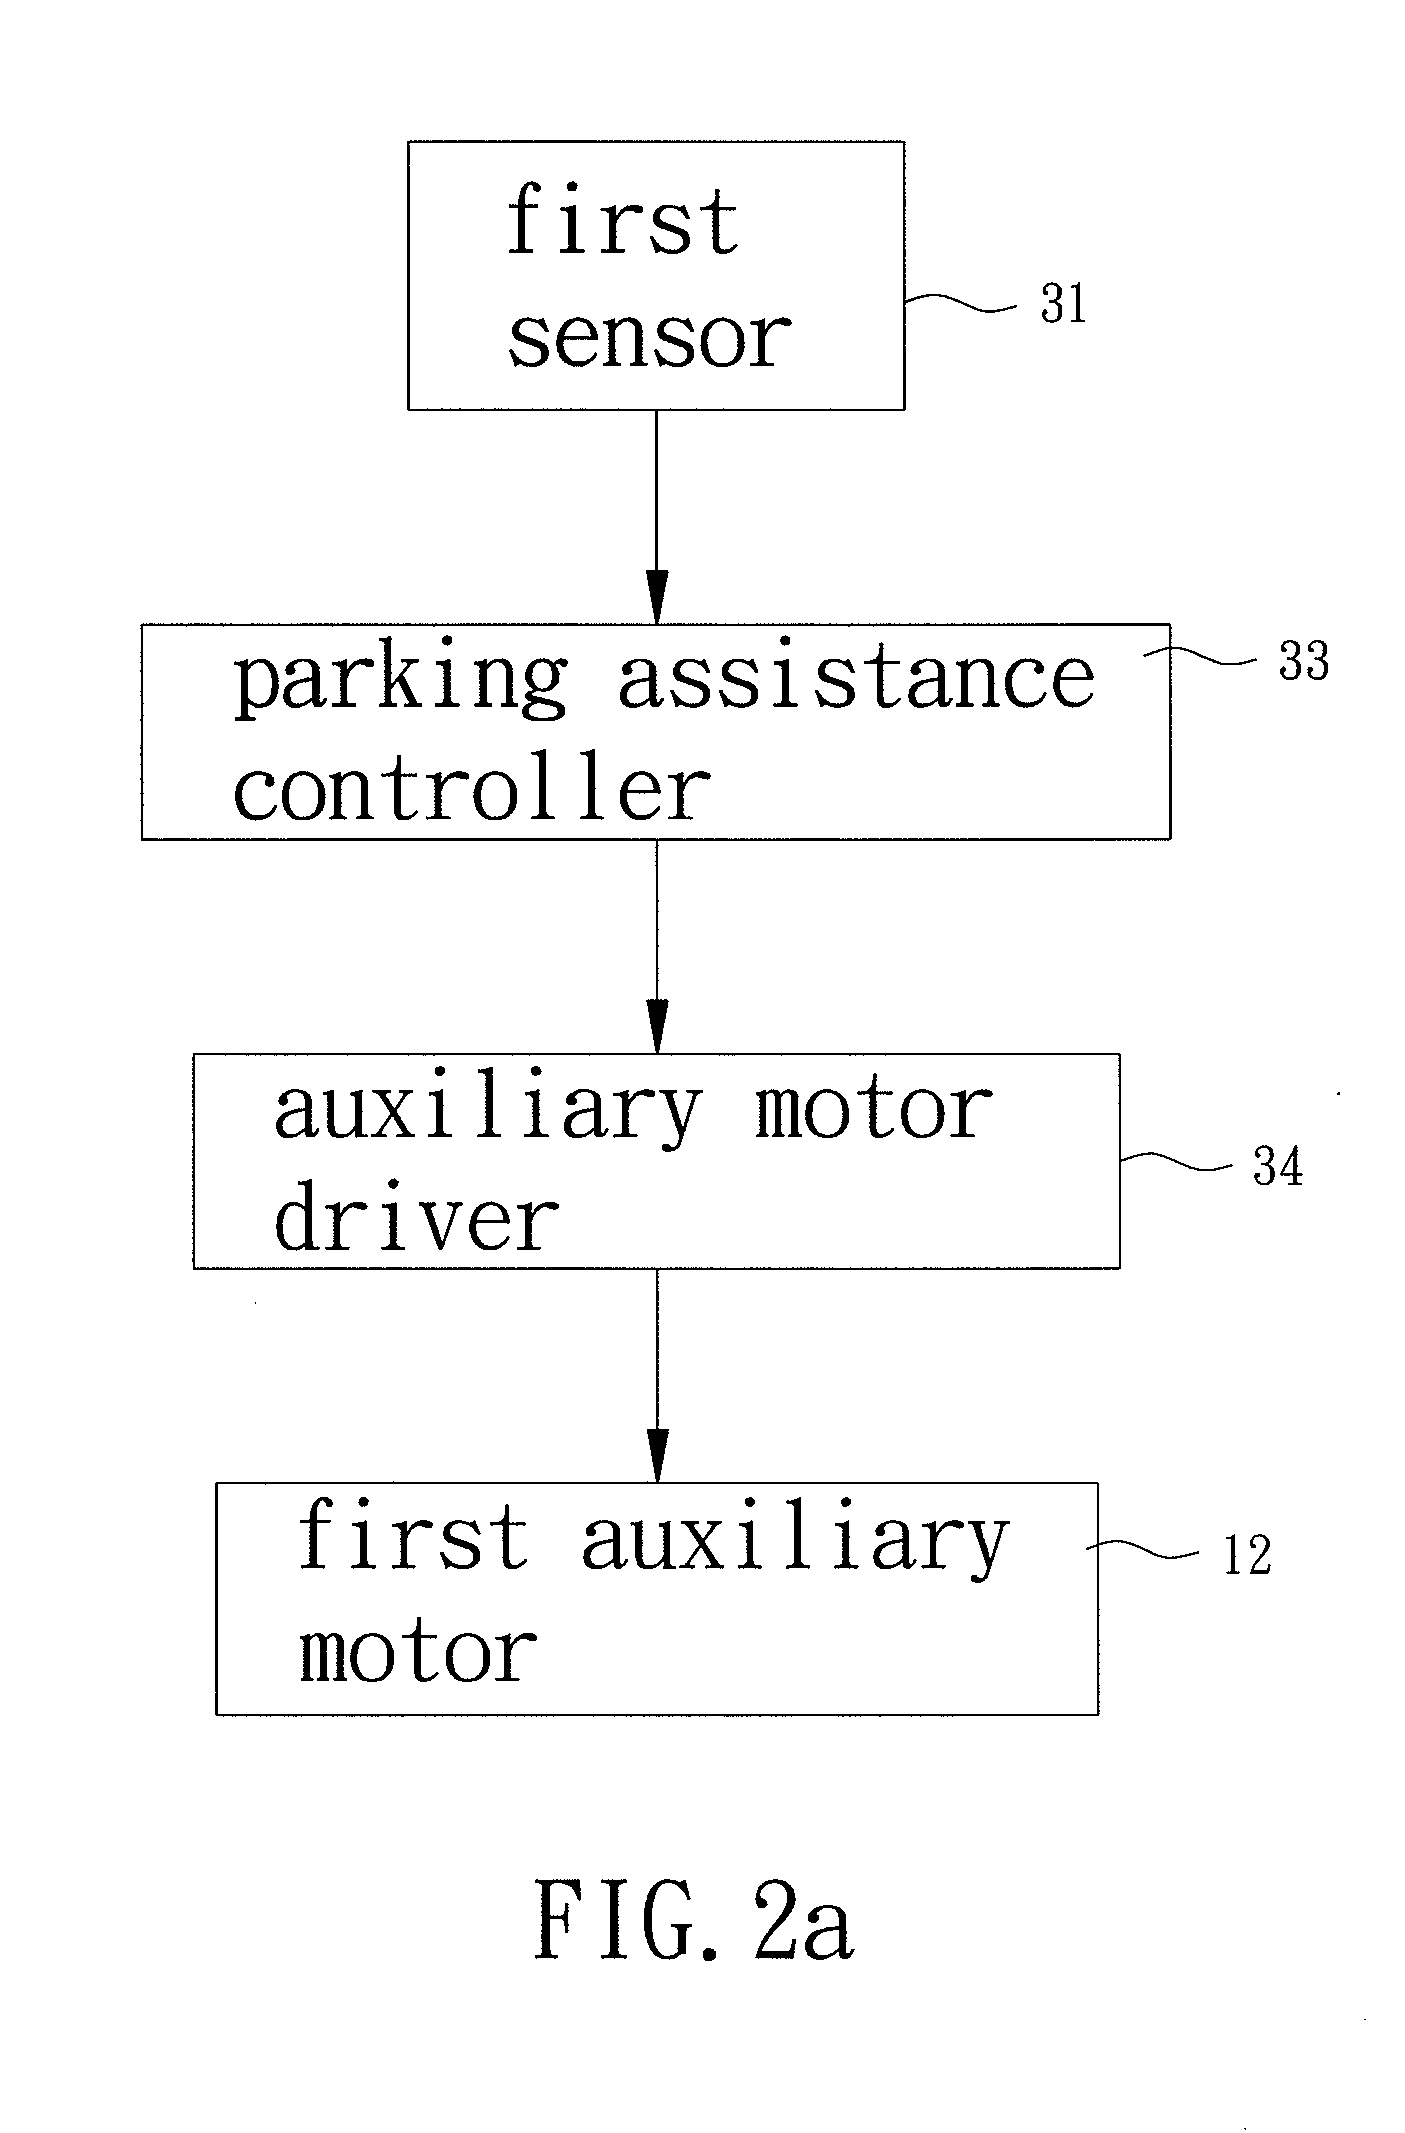 Parking assistance system